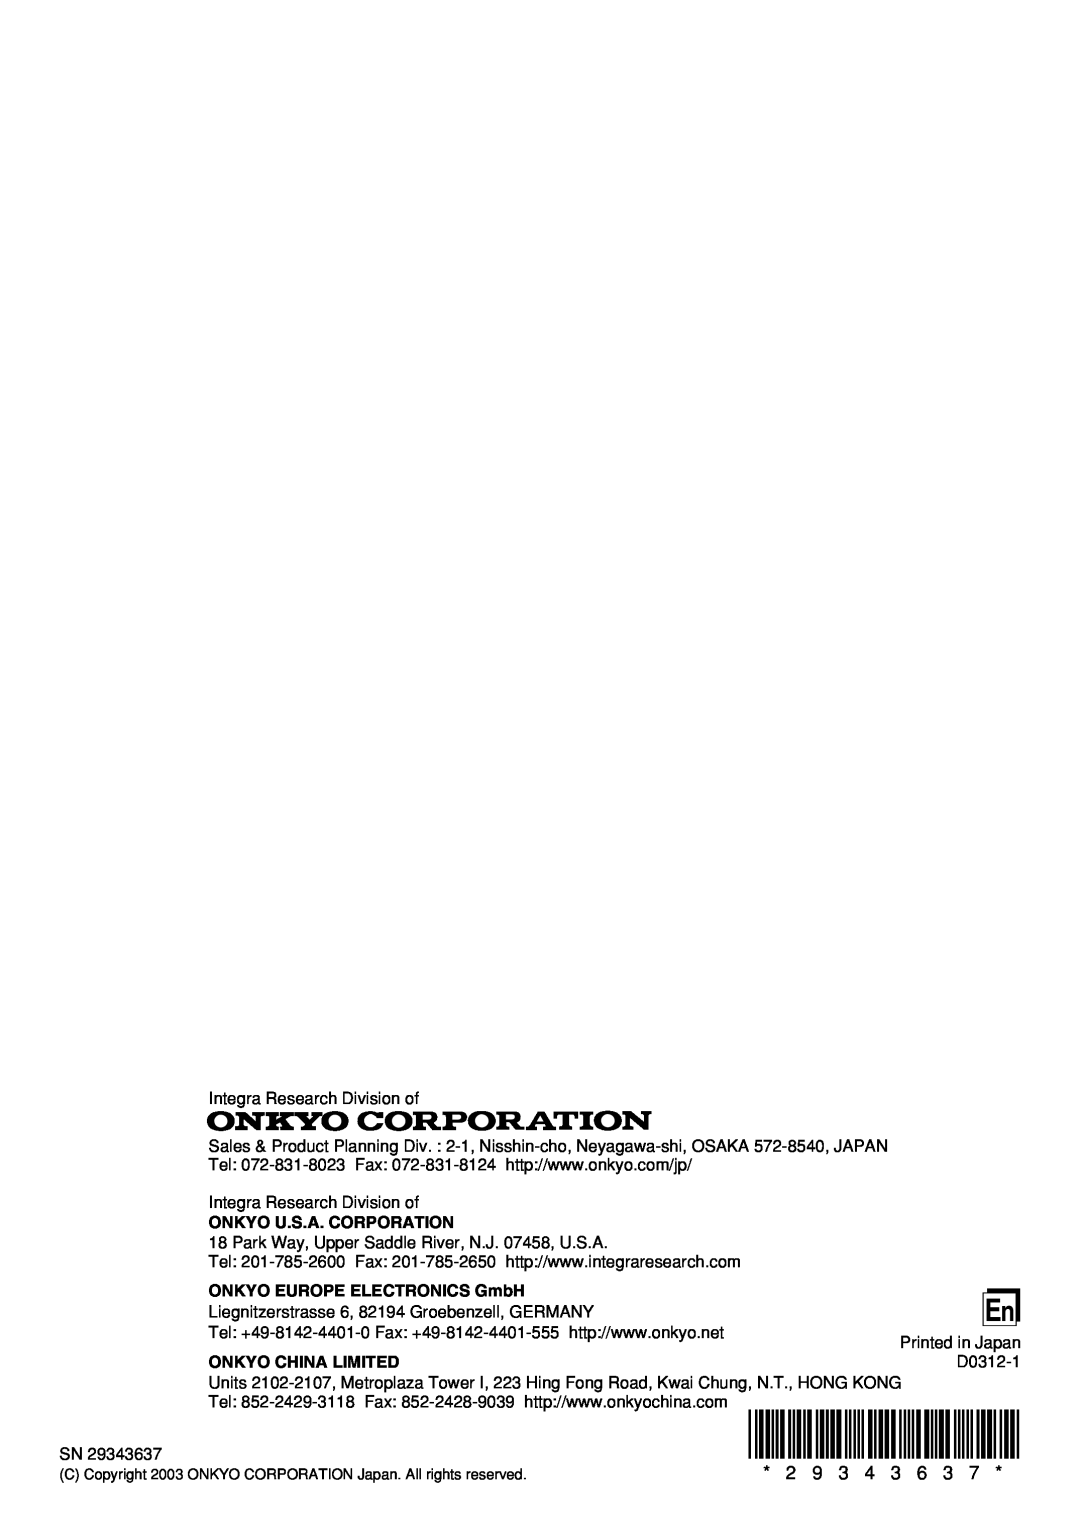 Onkyo RDA-7.1 instruction manual 2 9 3, Onkyo U.S.A. Corporation, ONKYO EUROPE ELECTRONICS GmbH, Onkyo China Limited 